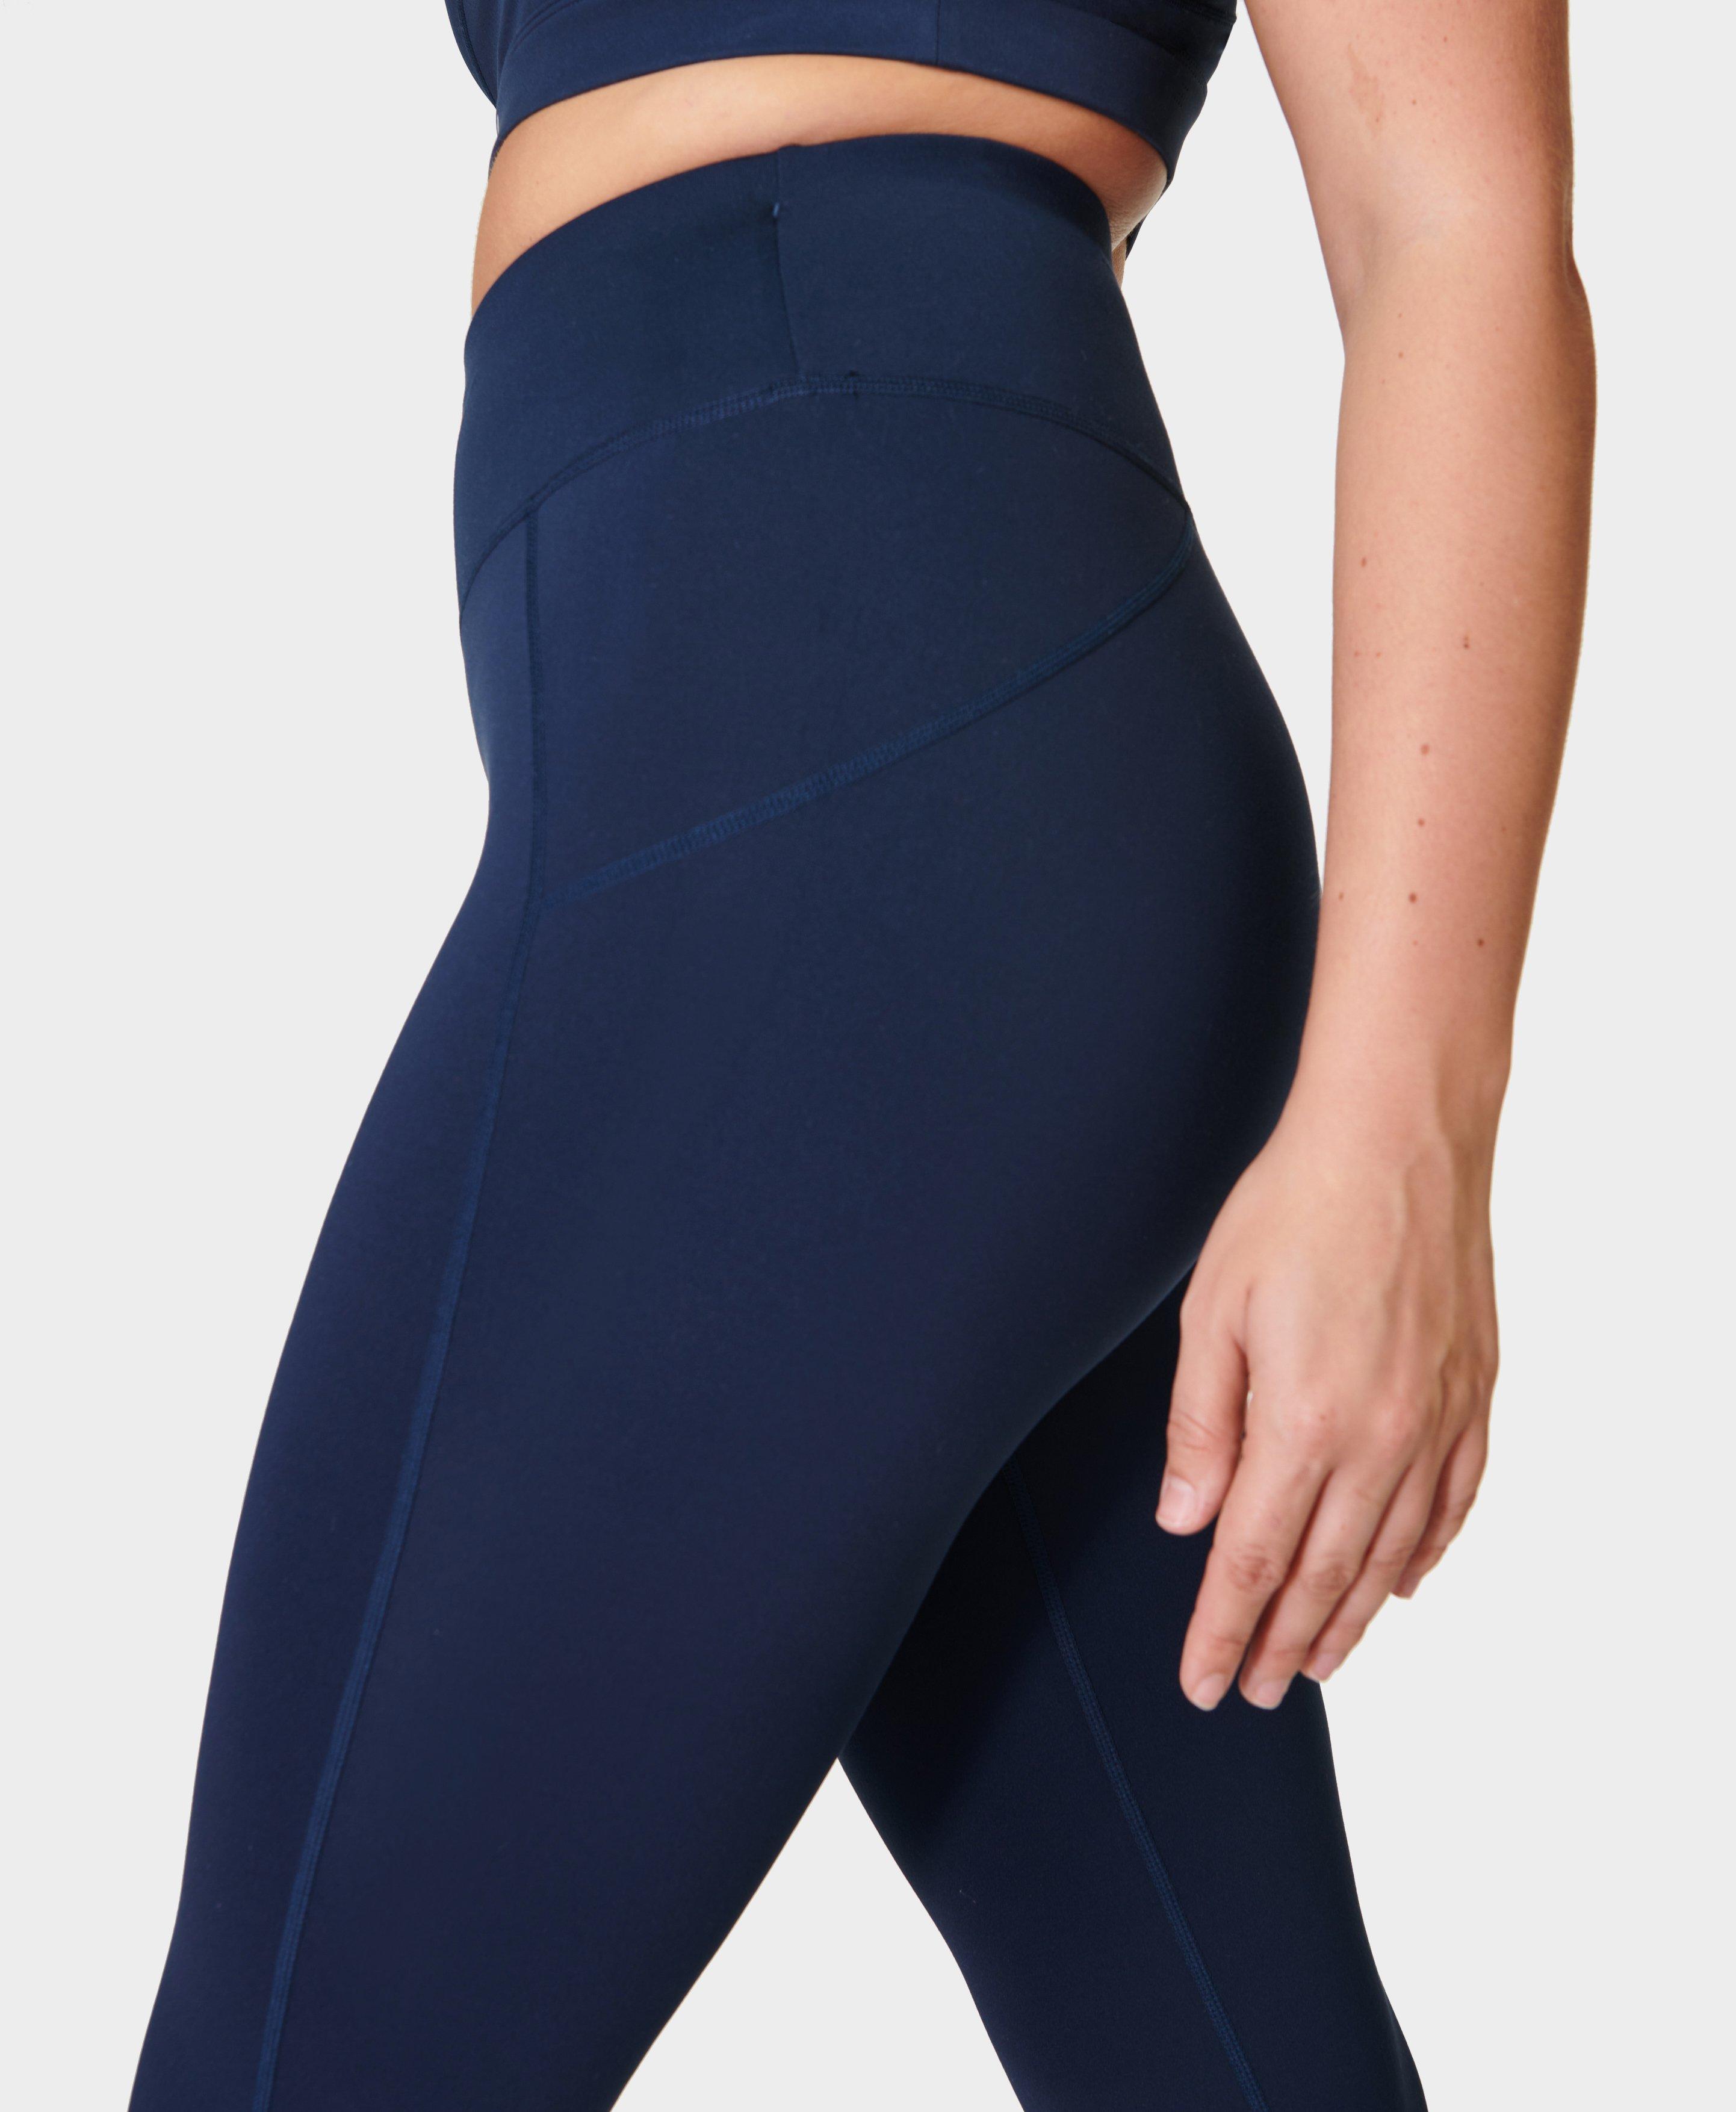 Purchase Wholesale high waist leggings. Free Returns & Net 60